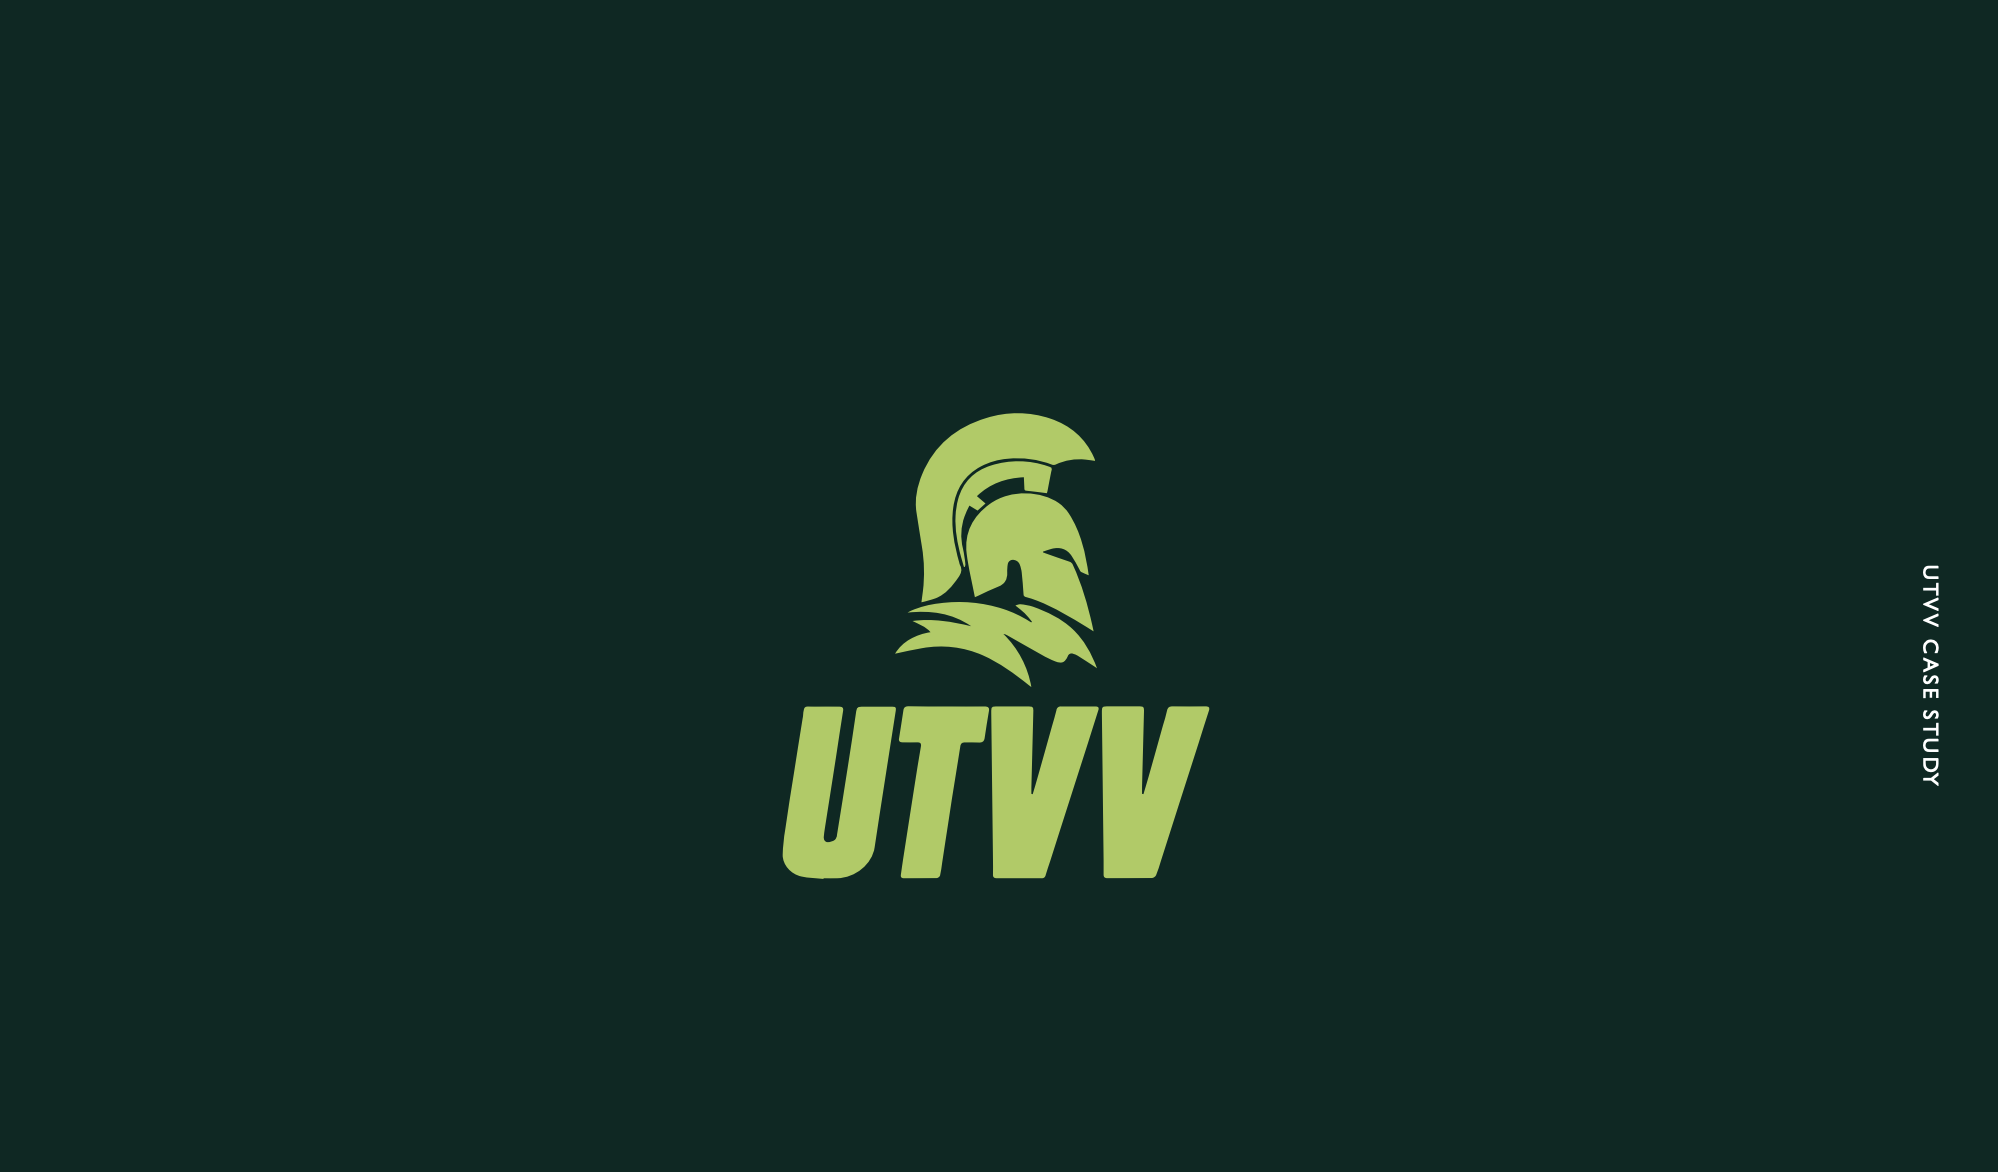 UTVV – old